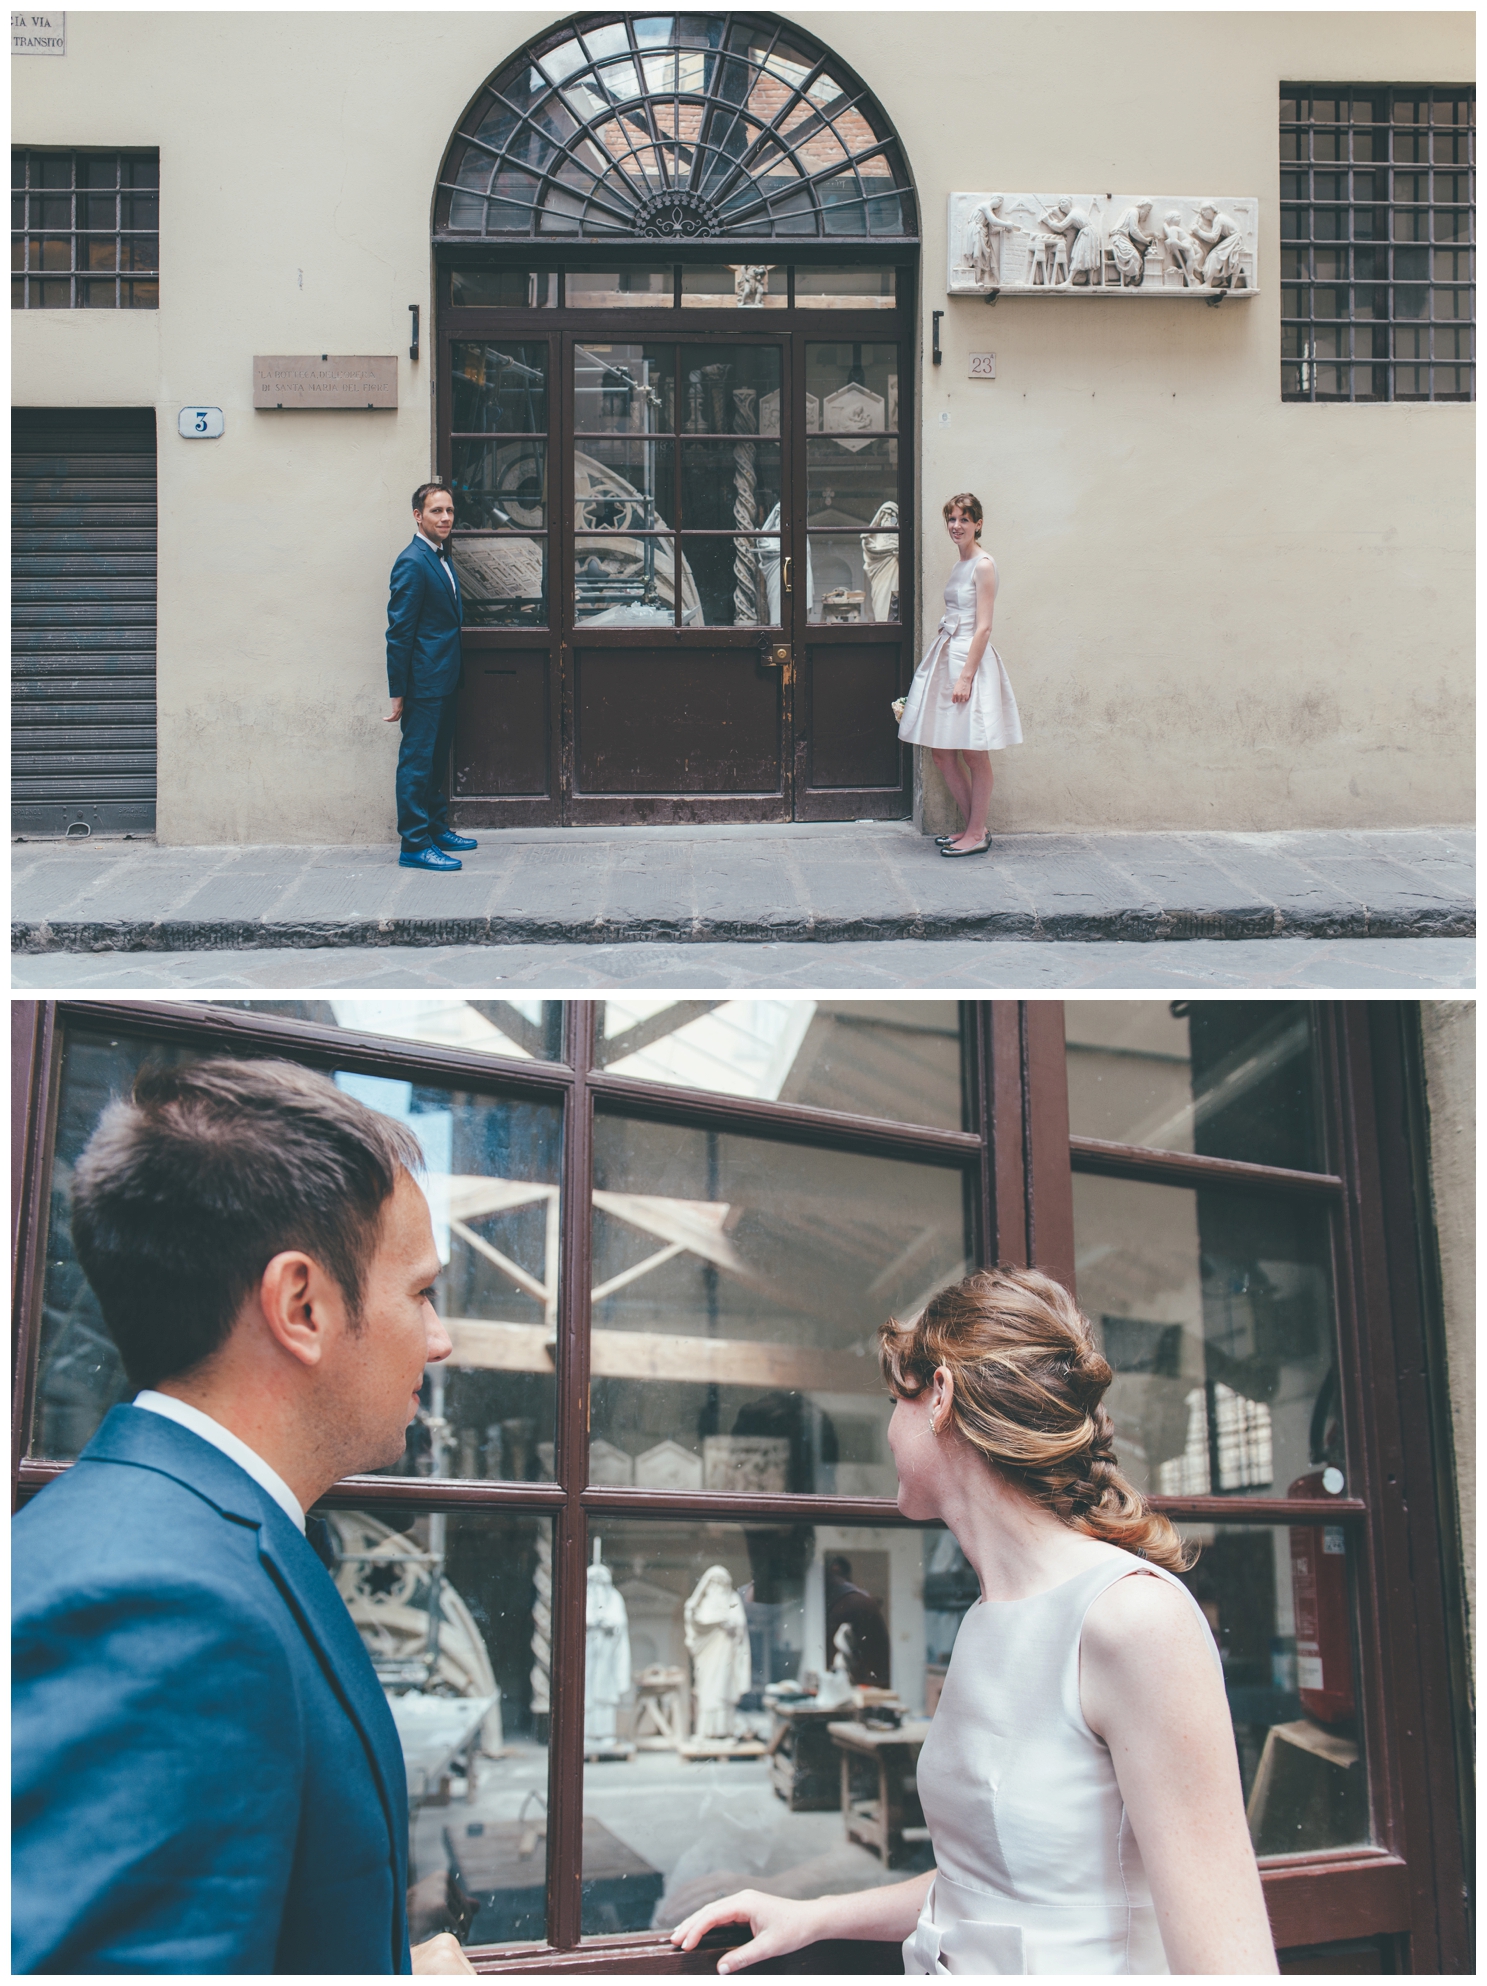  FunkyBird Photography Wedding Photographer in Italy&nbsp;  #destinationwedding #weddinginitaly #weddinginflorence #weddingphotography #smallwedding #funkybirdweddingdesign #funkybirdphotography&nbsp; 